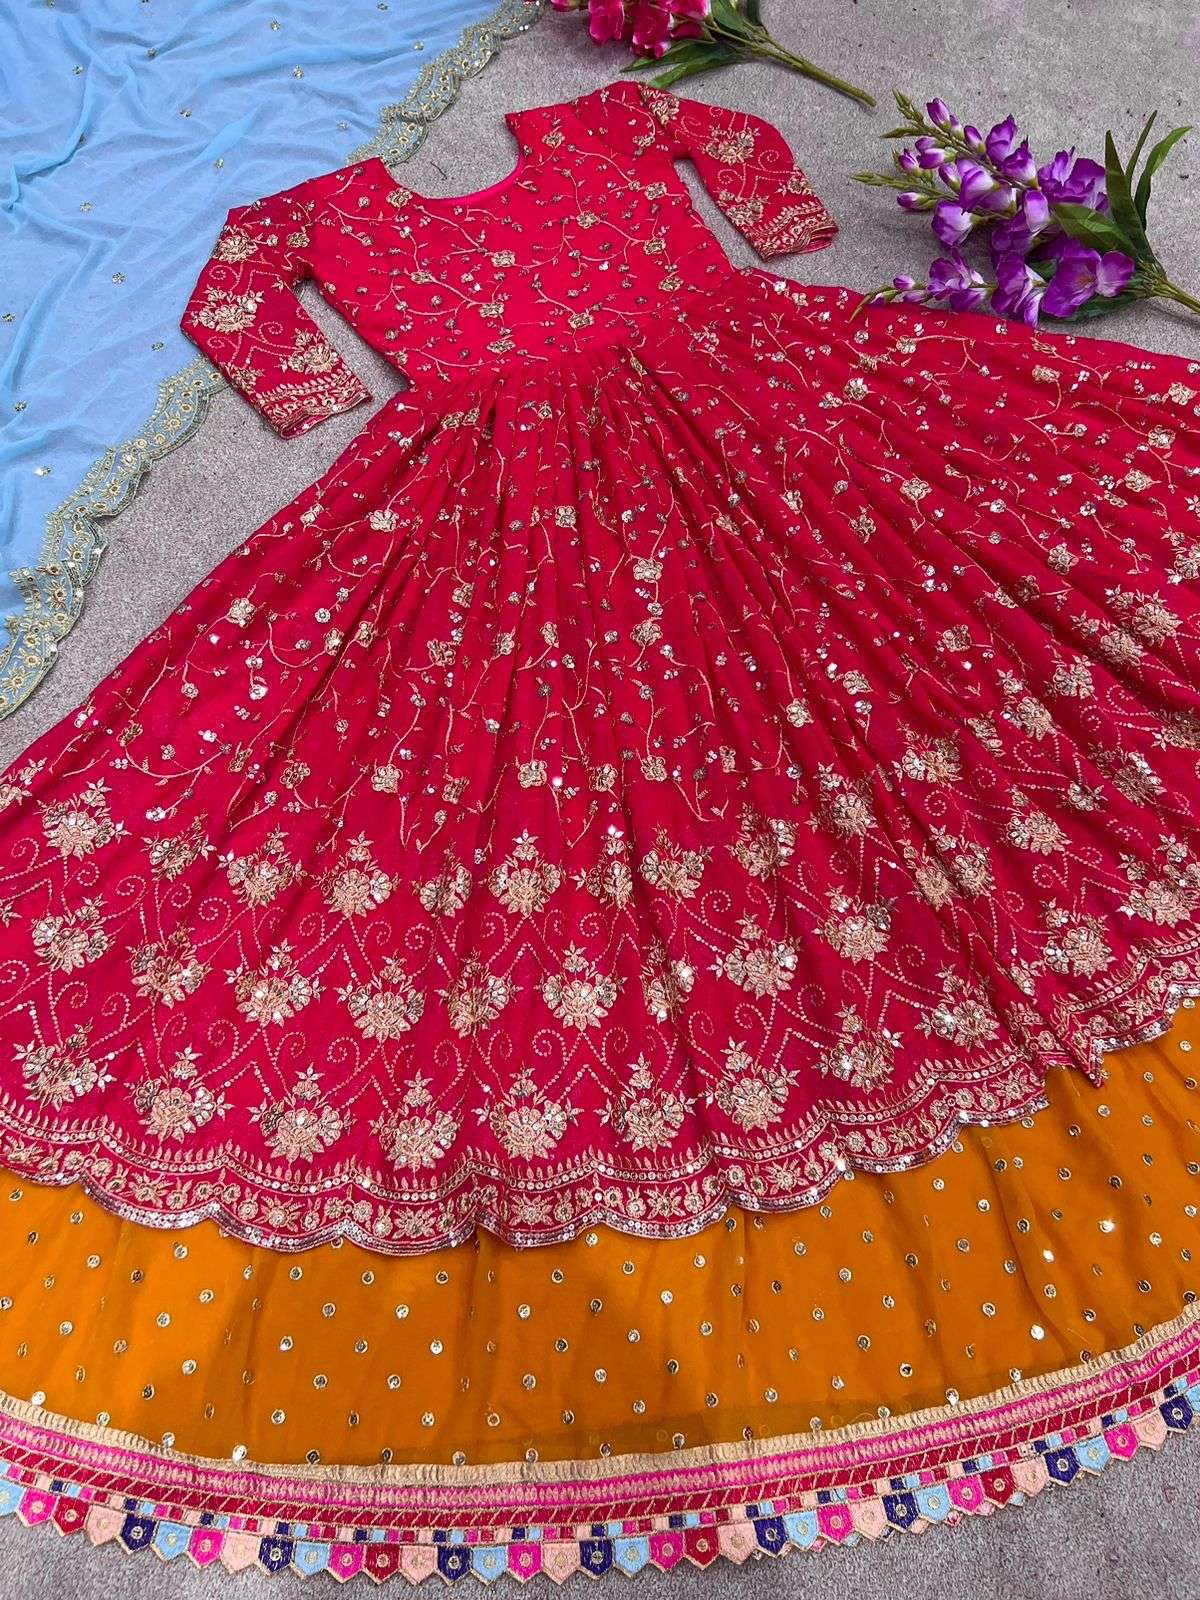 Kaarigari by Yankita Kapoor - Printed pants with plain kurta and dupatta❤️  Whatsapp on 9873802797 to place your order. Limited pcs left.  @richakapoor93 #shootdiaries #ootd #potd #pictureoftheday #goodvibes  #indian #ethnic #girls #girlsfashion #